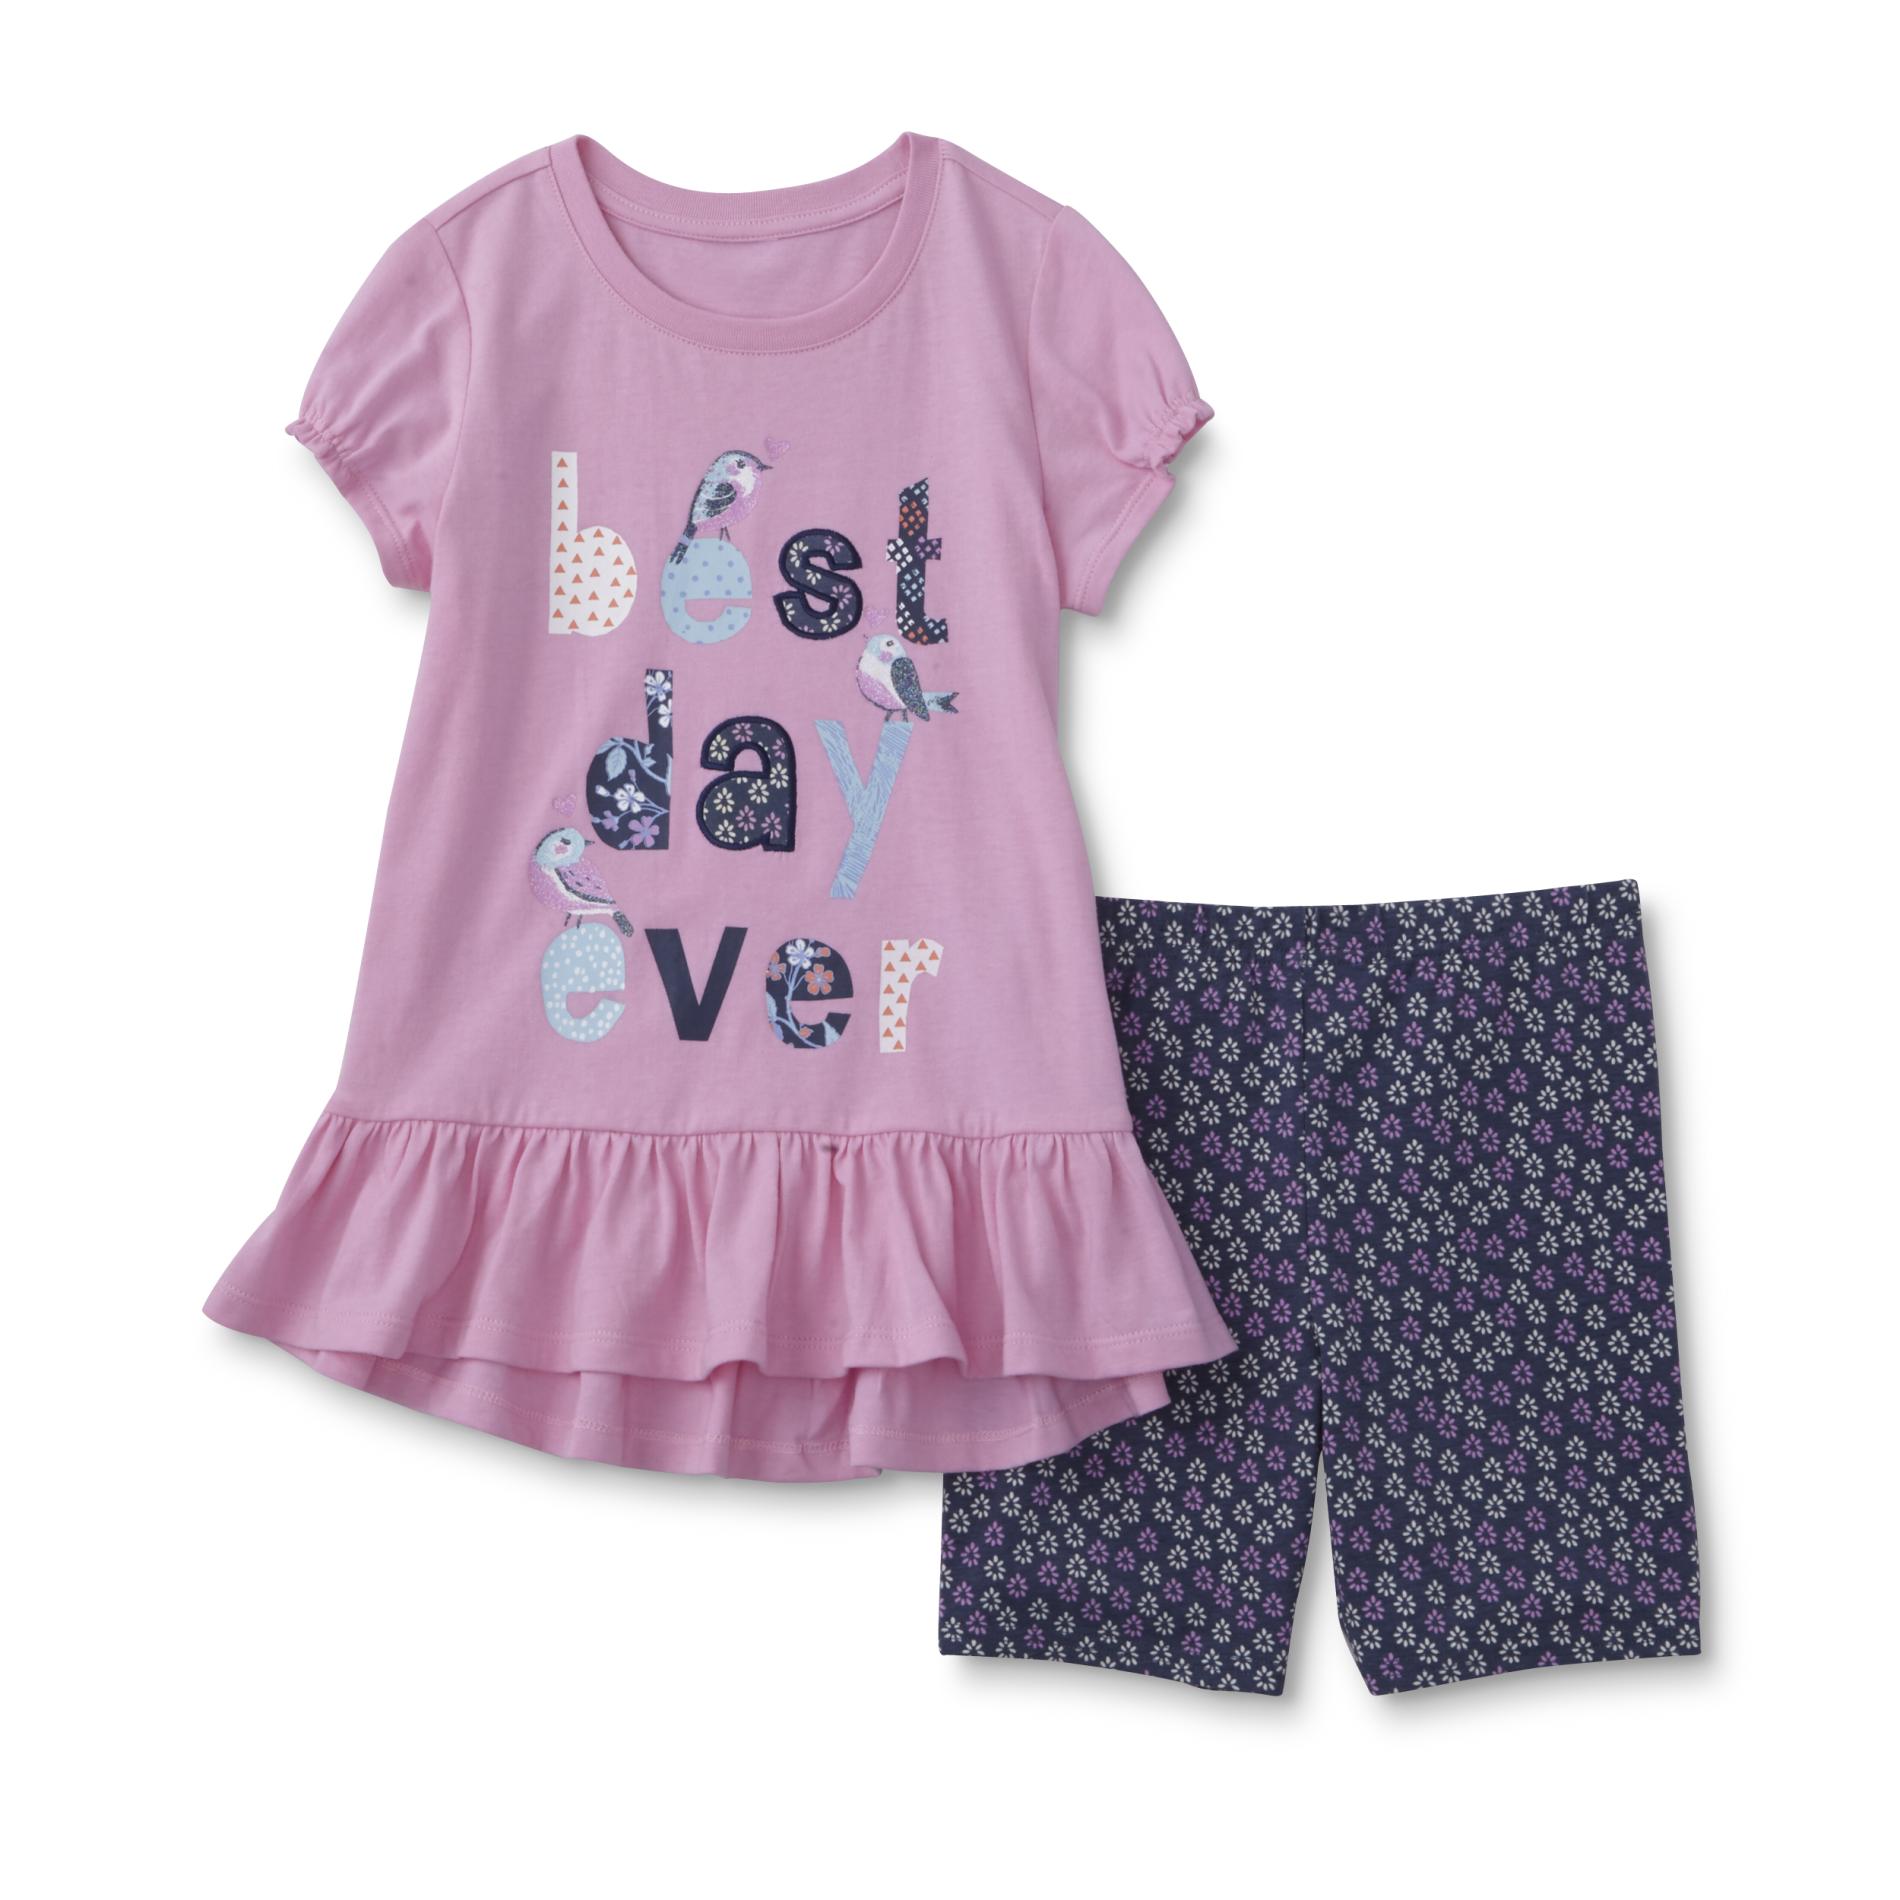 Toughskins Infant & Toddler Girls' T-Shirt & Bike Shorts - Birds & Floral